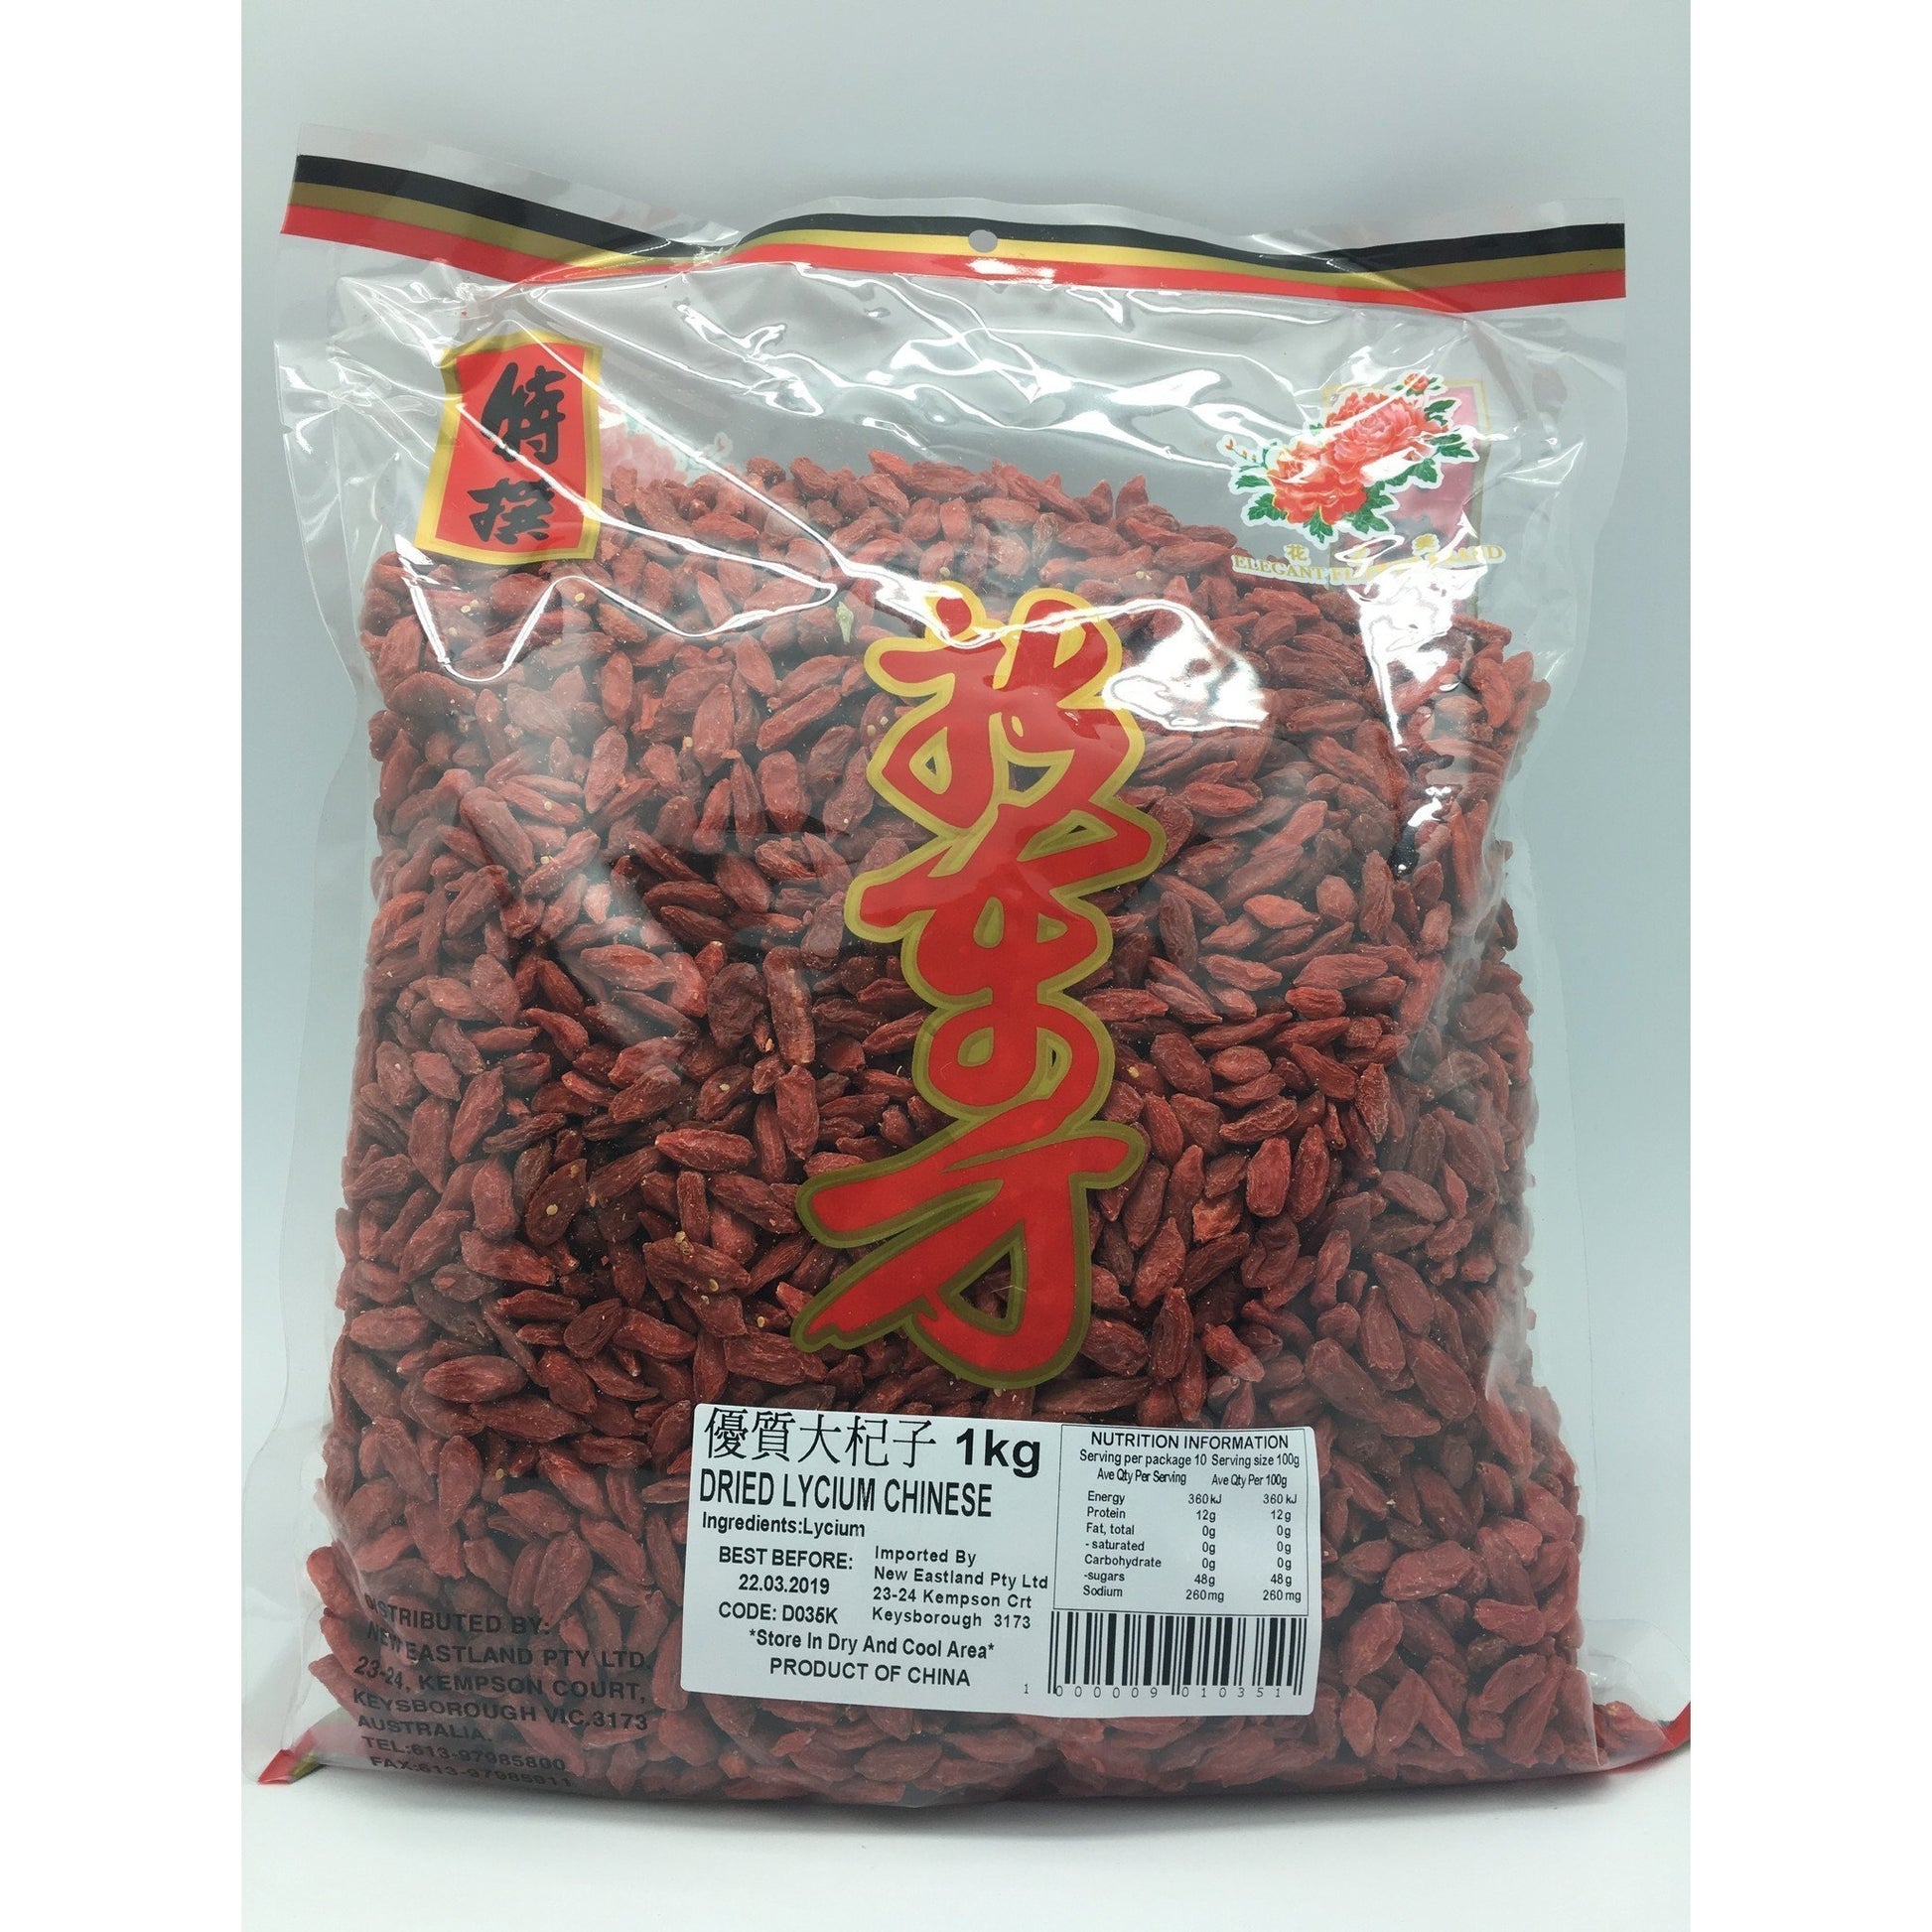 D035K New Eastland Pty Ltd - Dried Lycium Chinese 1kg - 25 bags / 1 CTN - New Eastland Pty Ltd - Asian food wholesalers